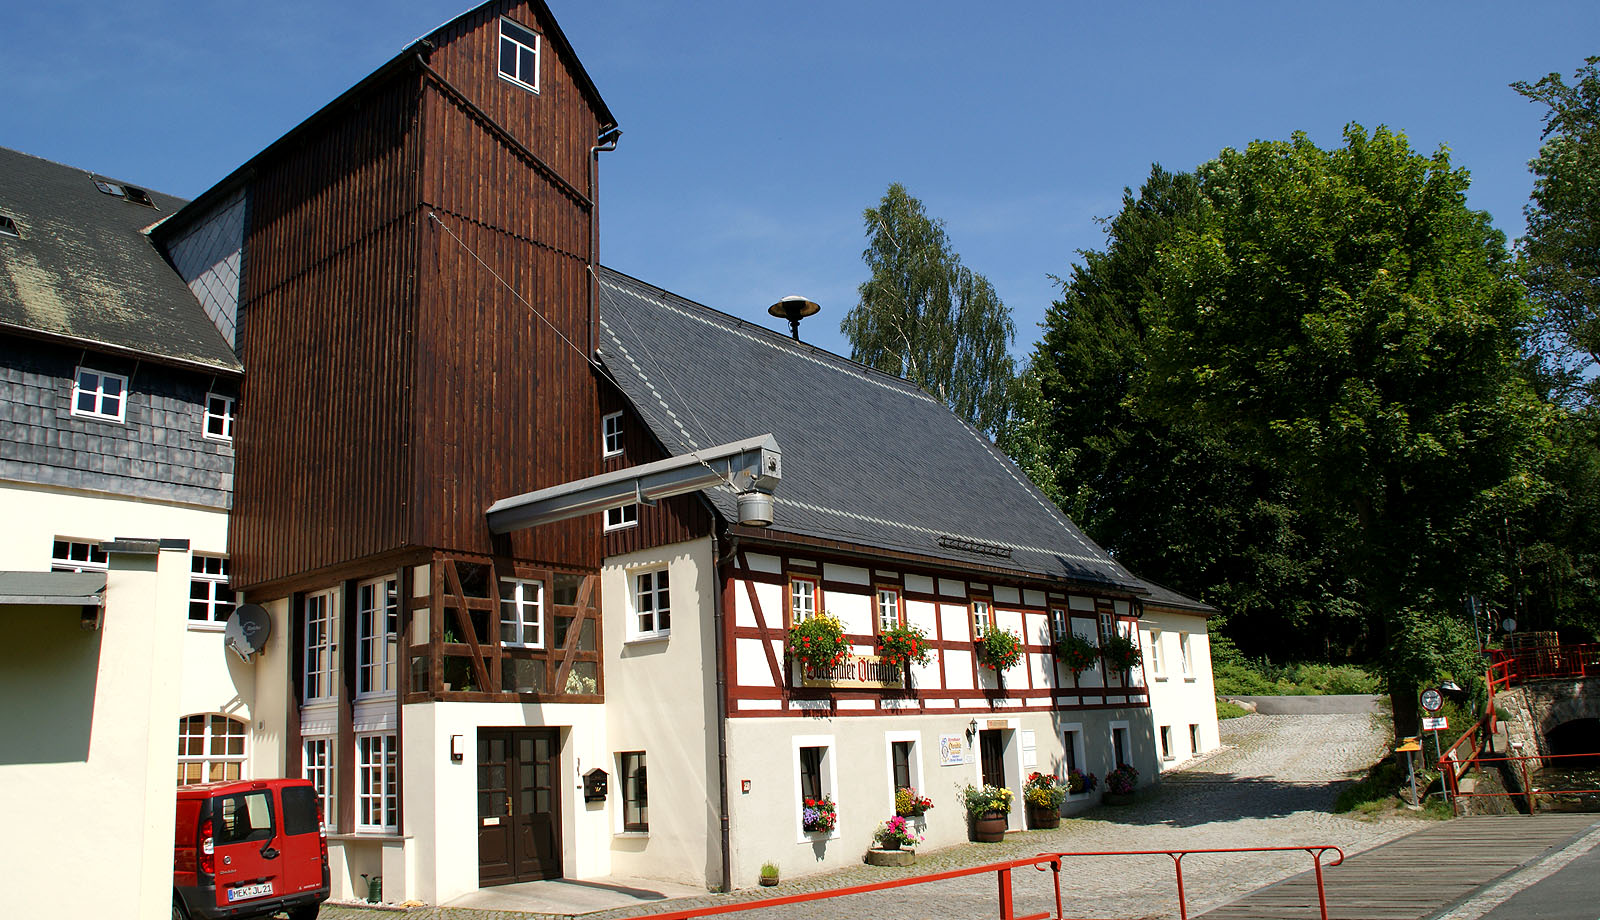 Ölmühle in Dörnthal